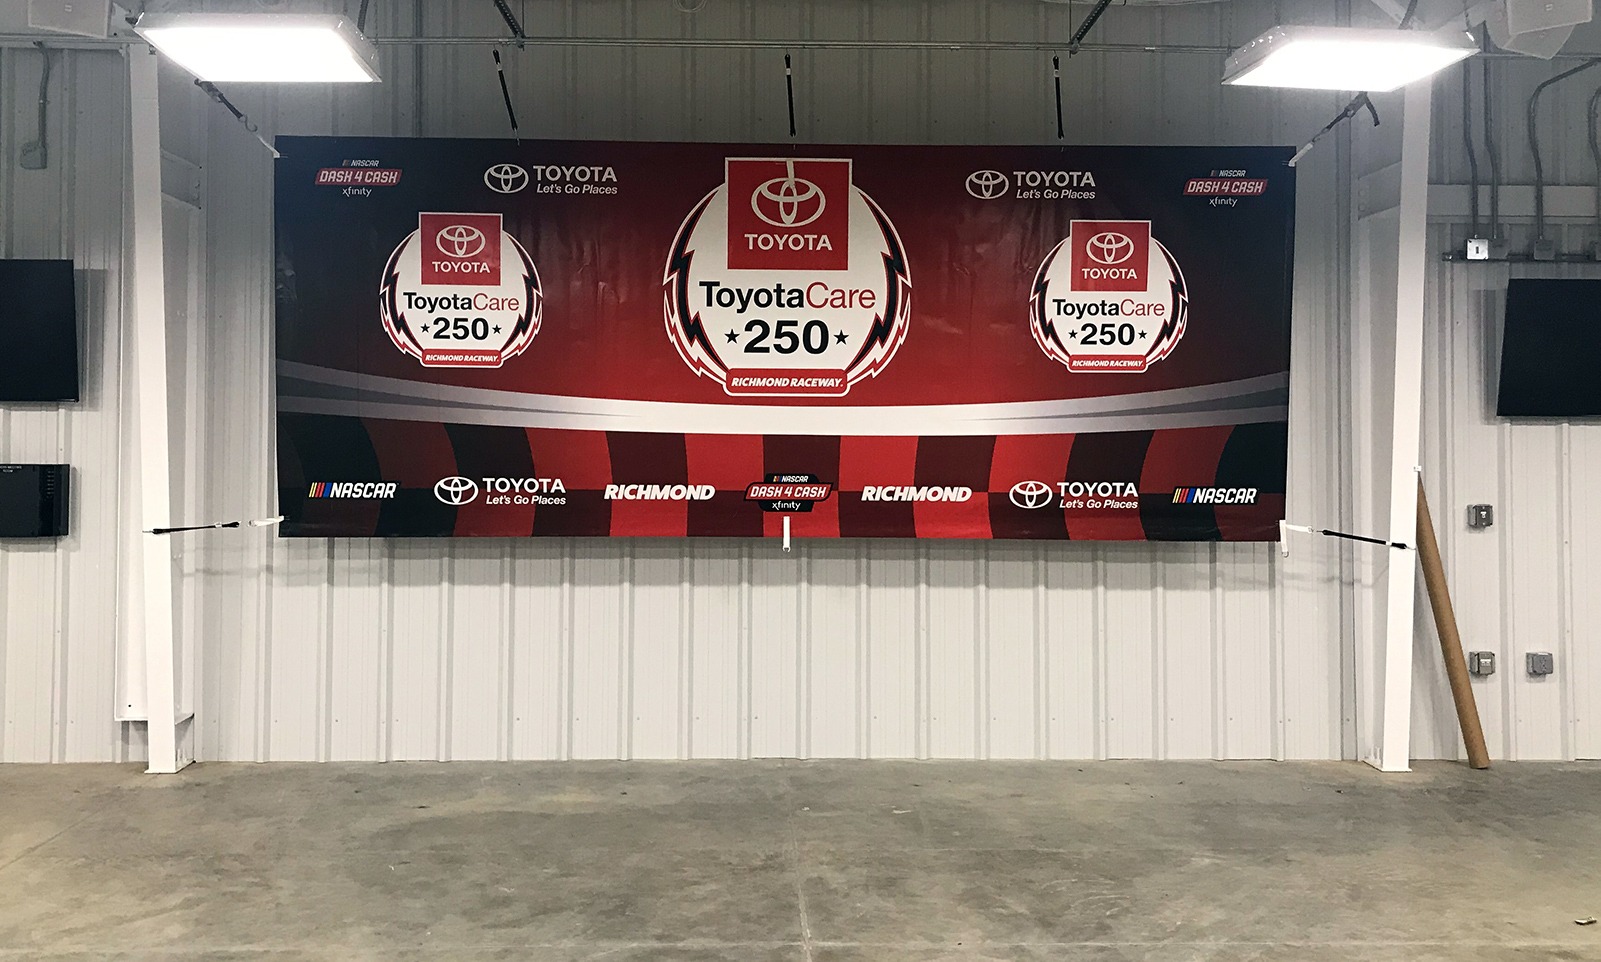 Richmond Raceway Sponsor Hanging Banners